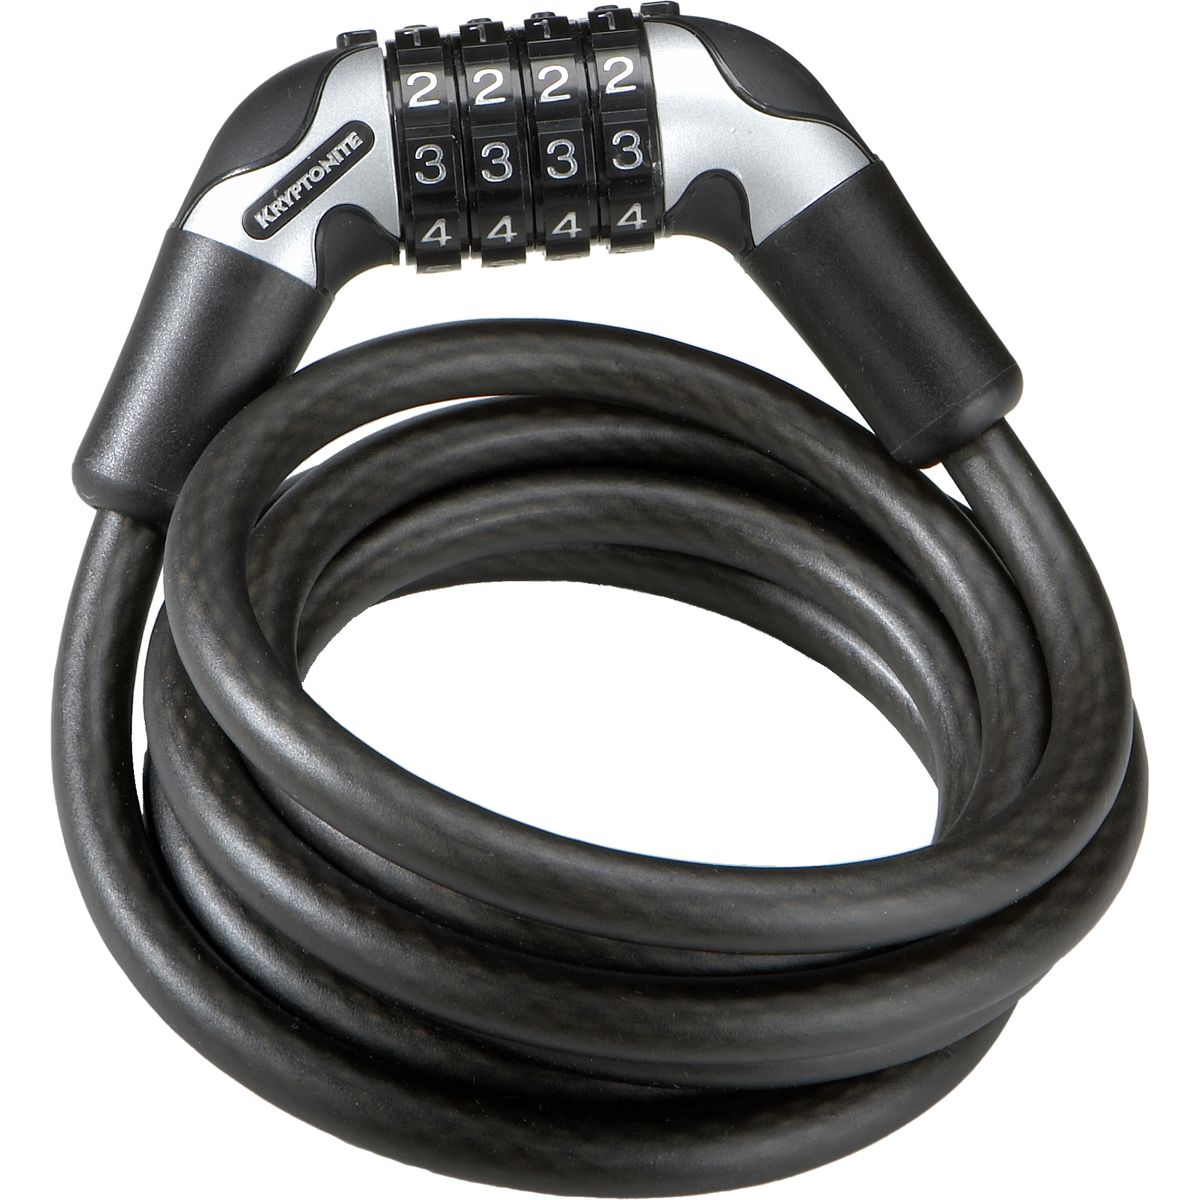 Kryptonite KryptoFlex 1018 Combo Cable Lock